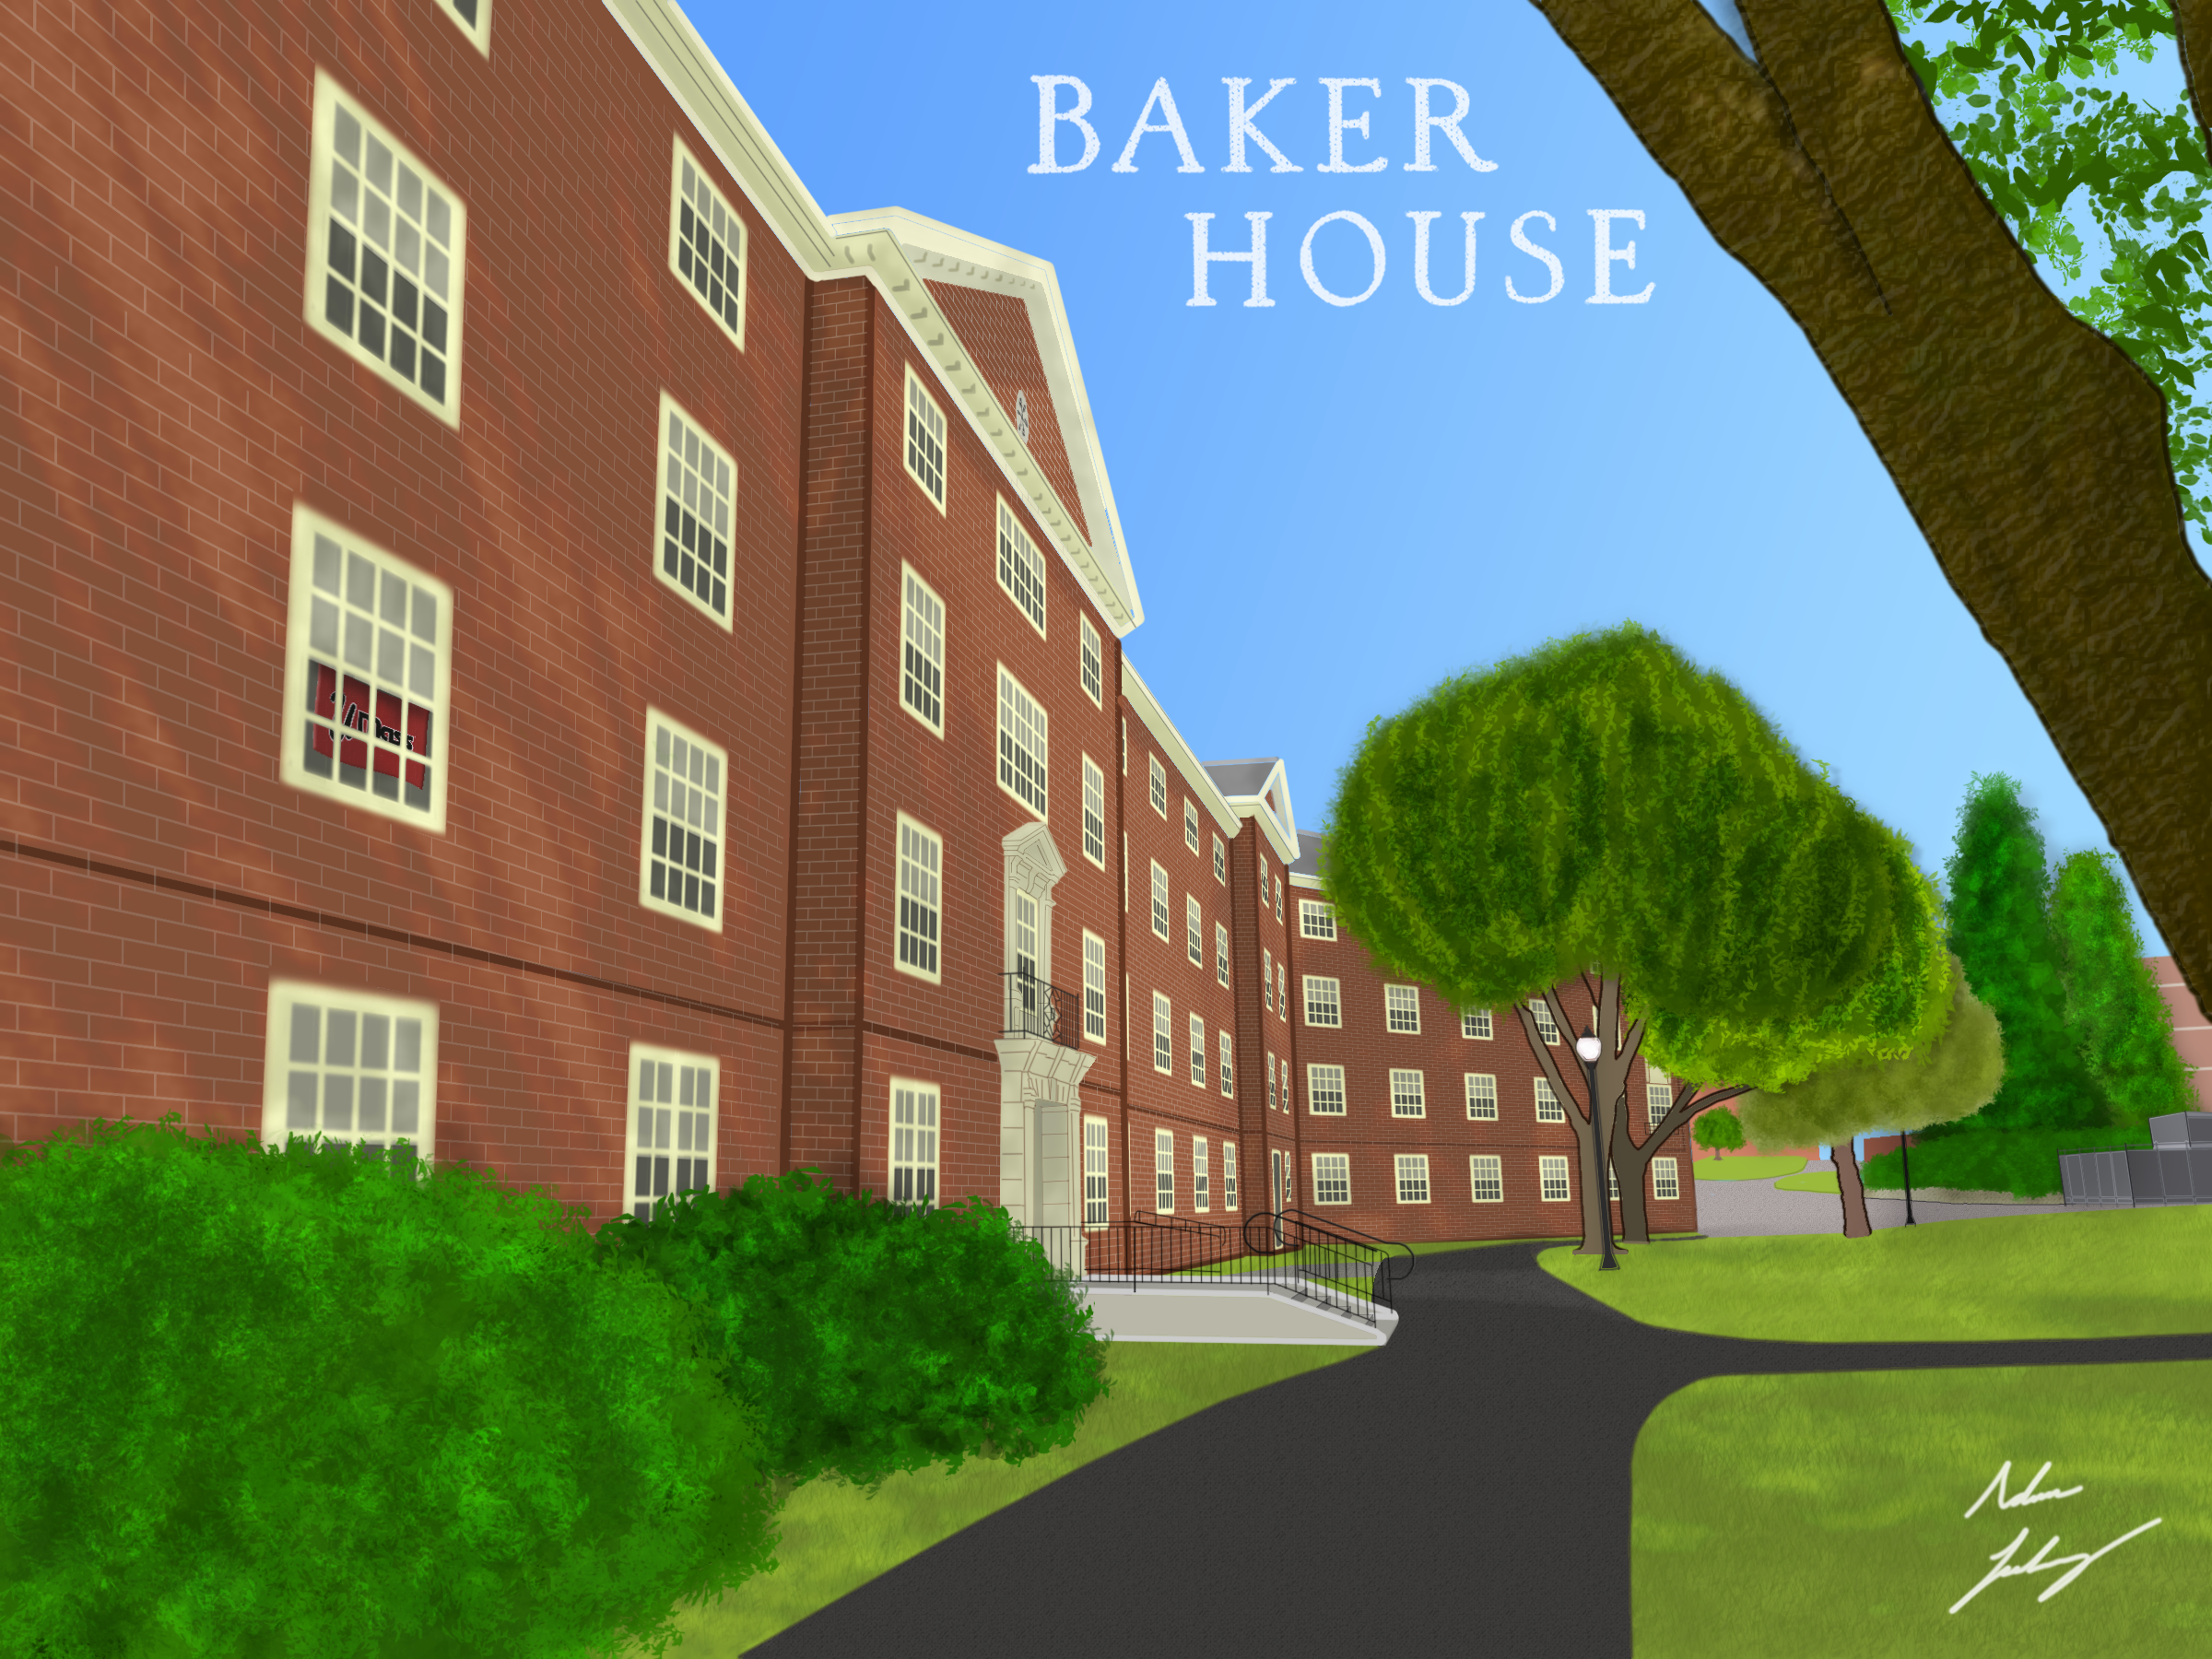 A drawing of Baker House at UMass